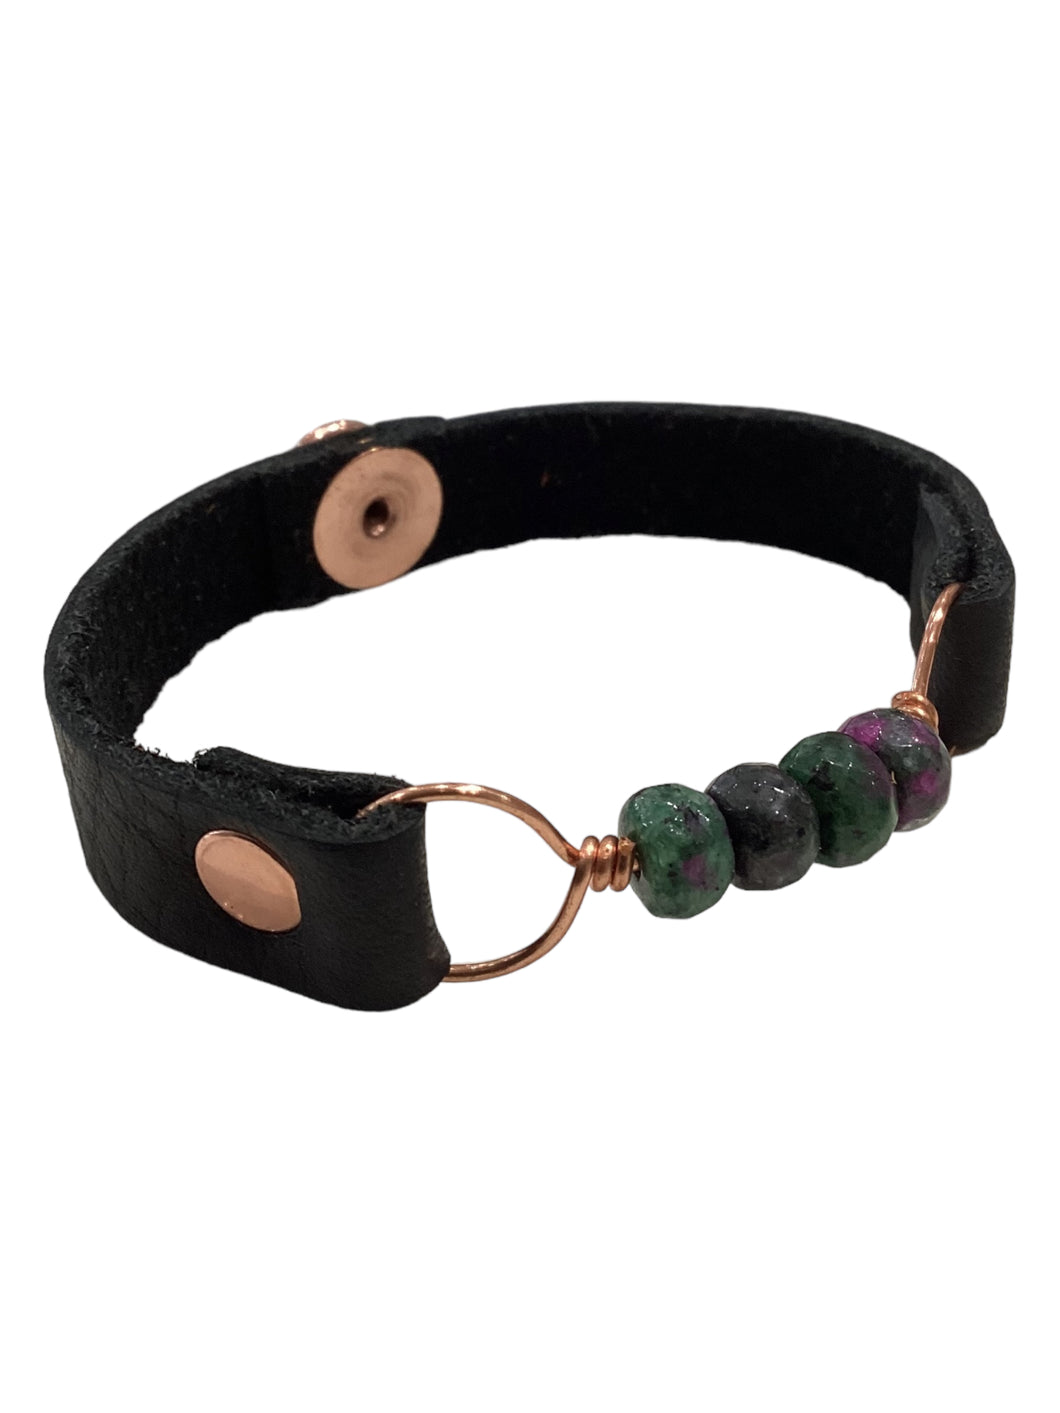 Slim Leather Bracelet with Stones - Ruby Zoisite